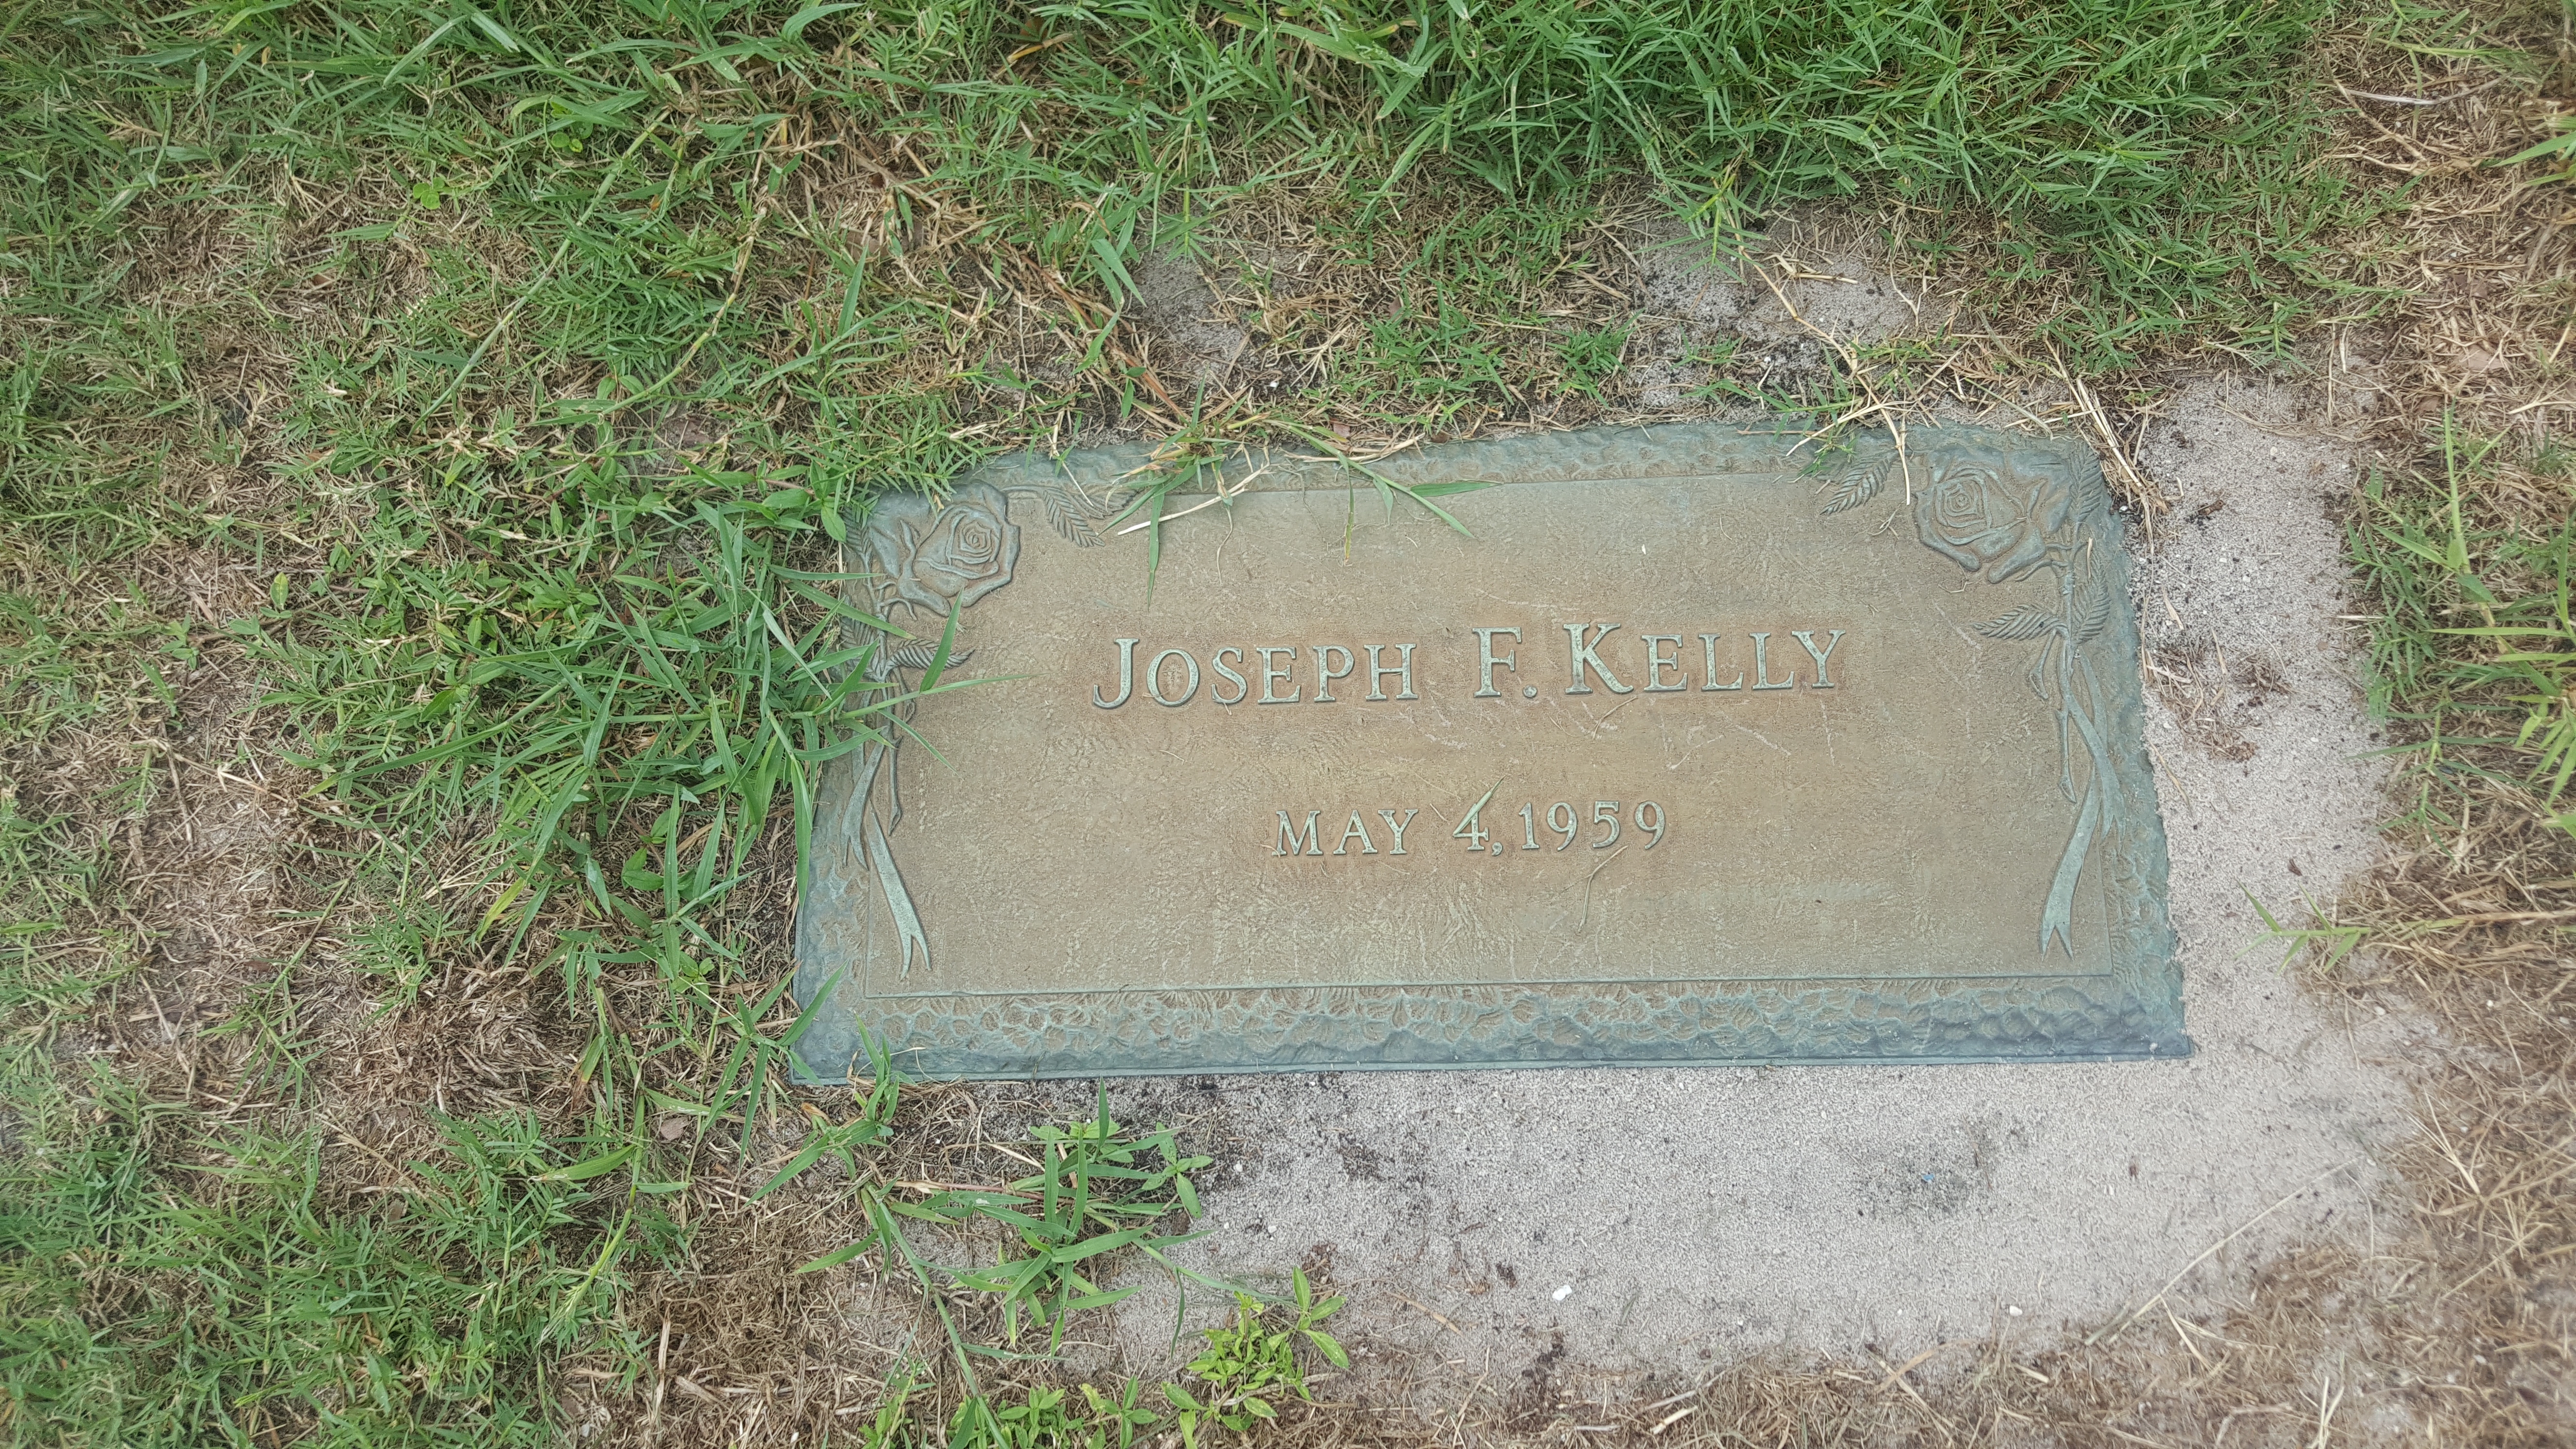 Joseph F Kelly